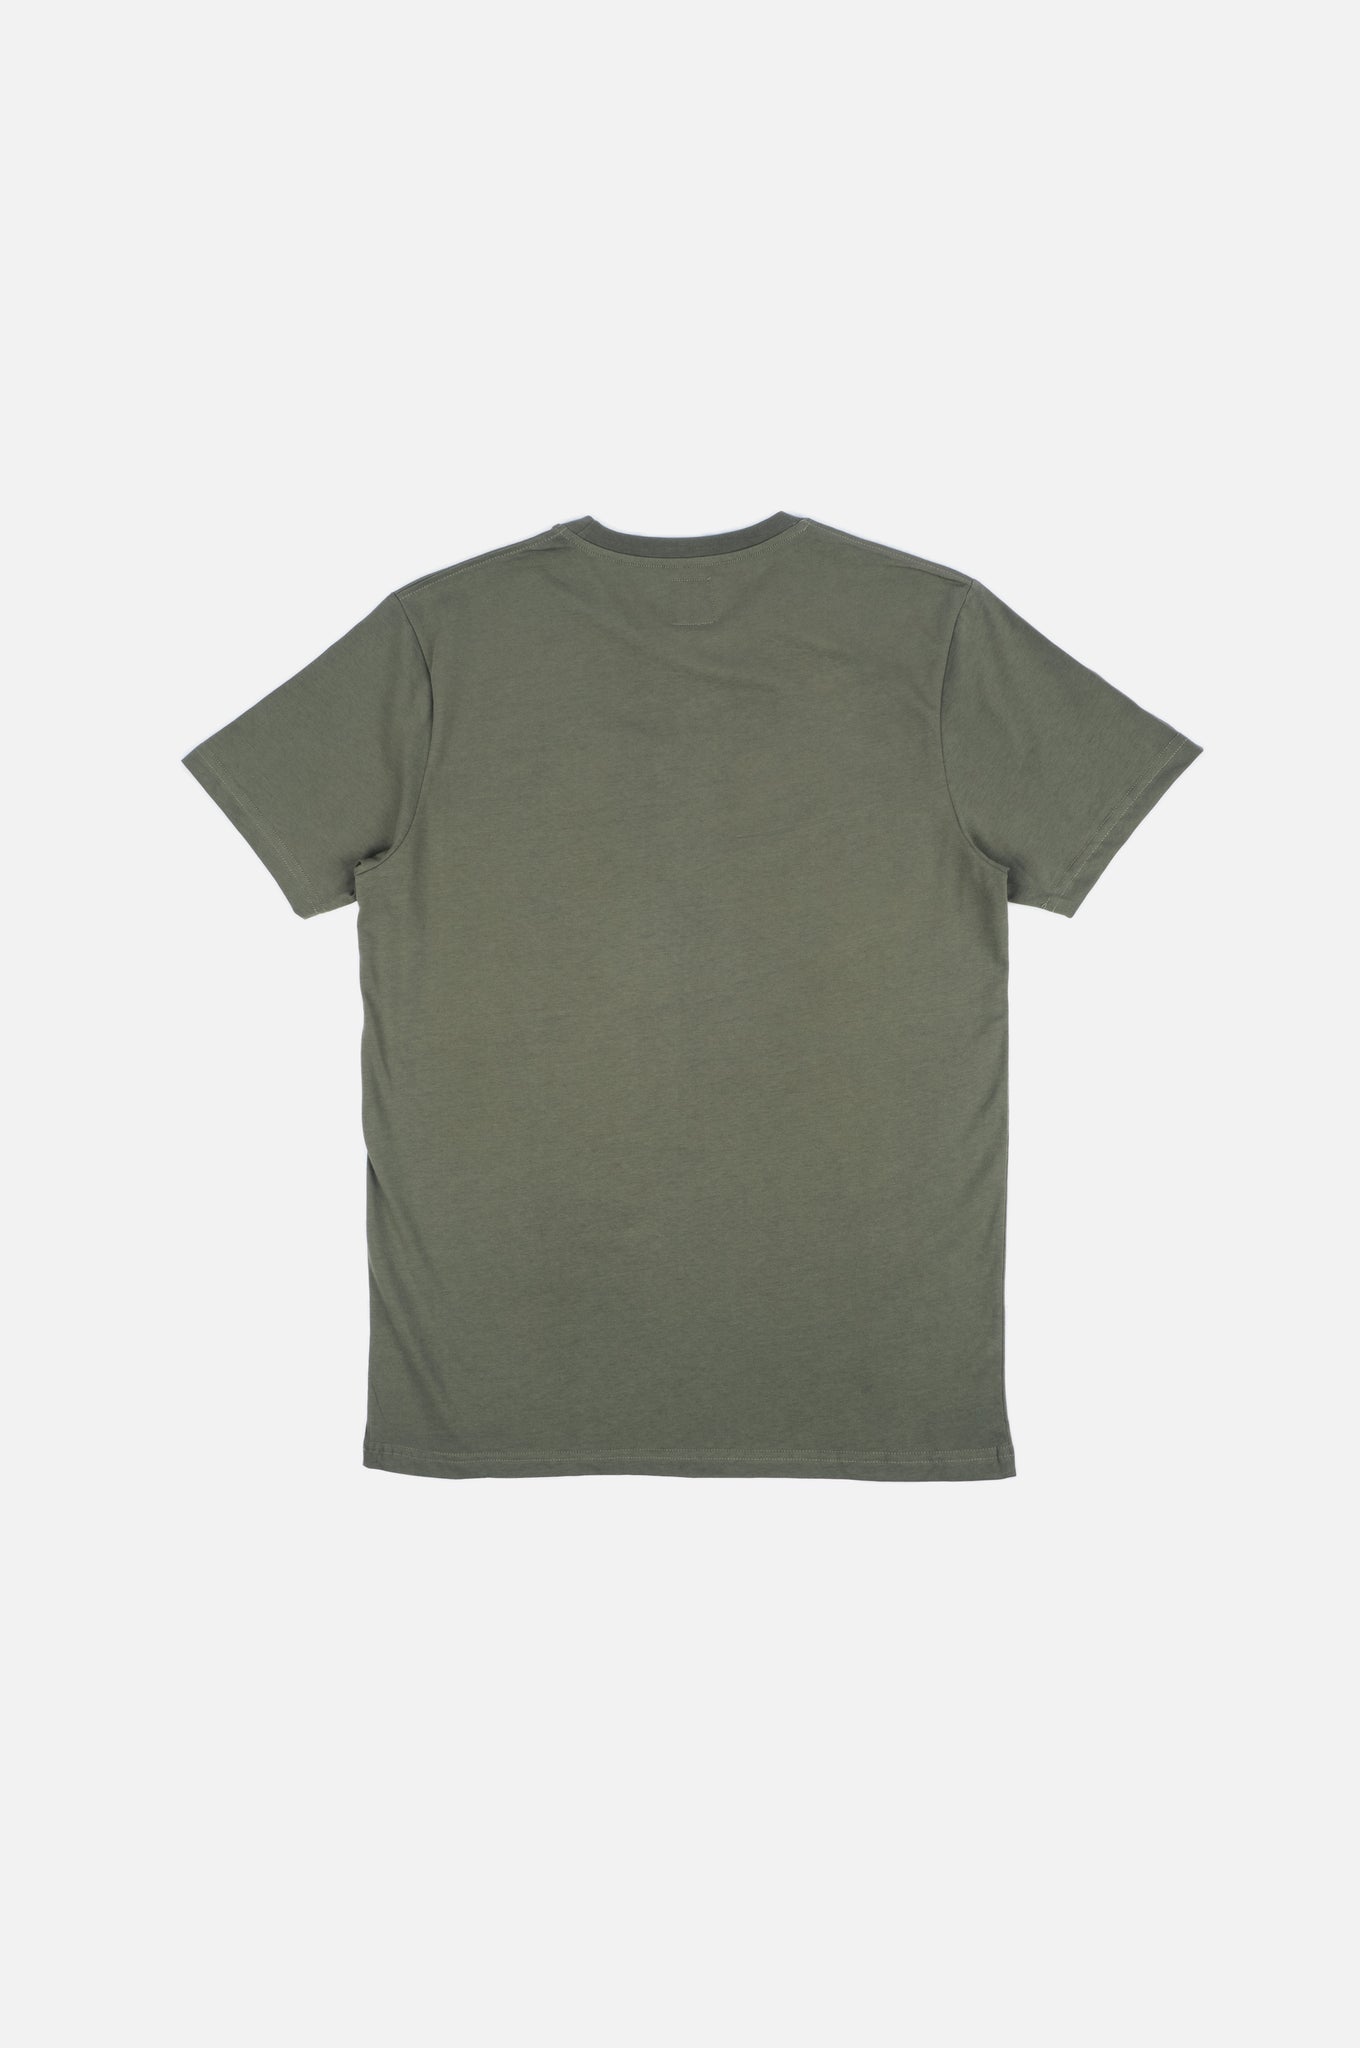 Trendsplant x Equilibrium - Icons T-Shirt Kelp